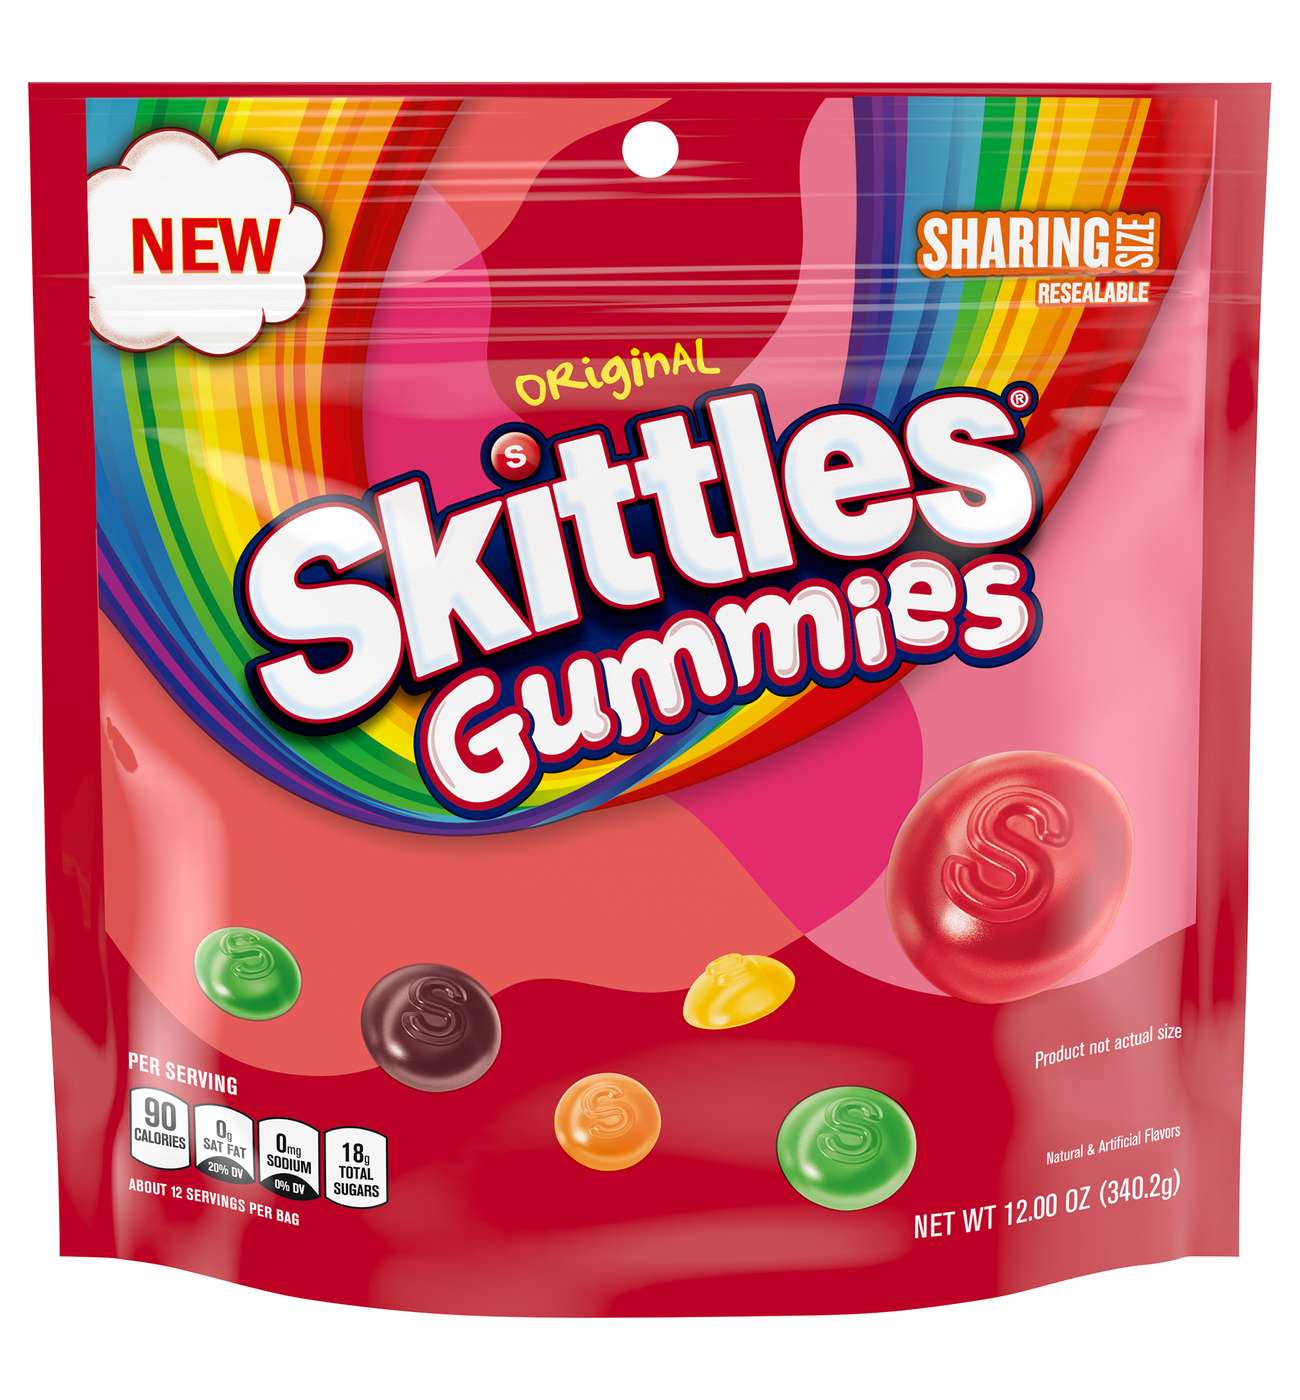 Skittles Original Gummies Candy - Sharing Size; image 1 of 8